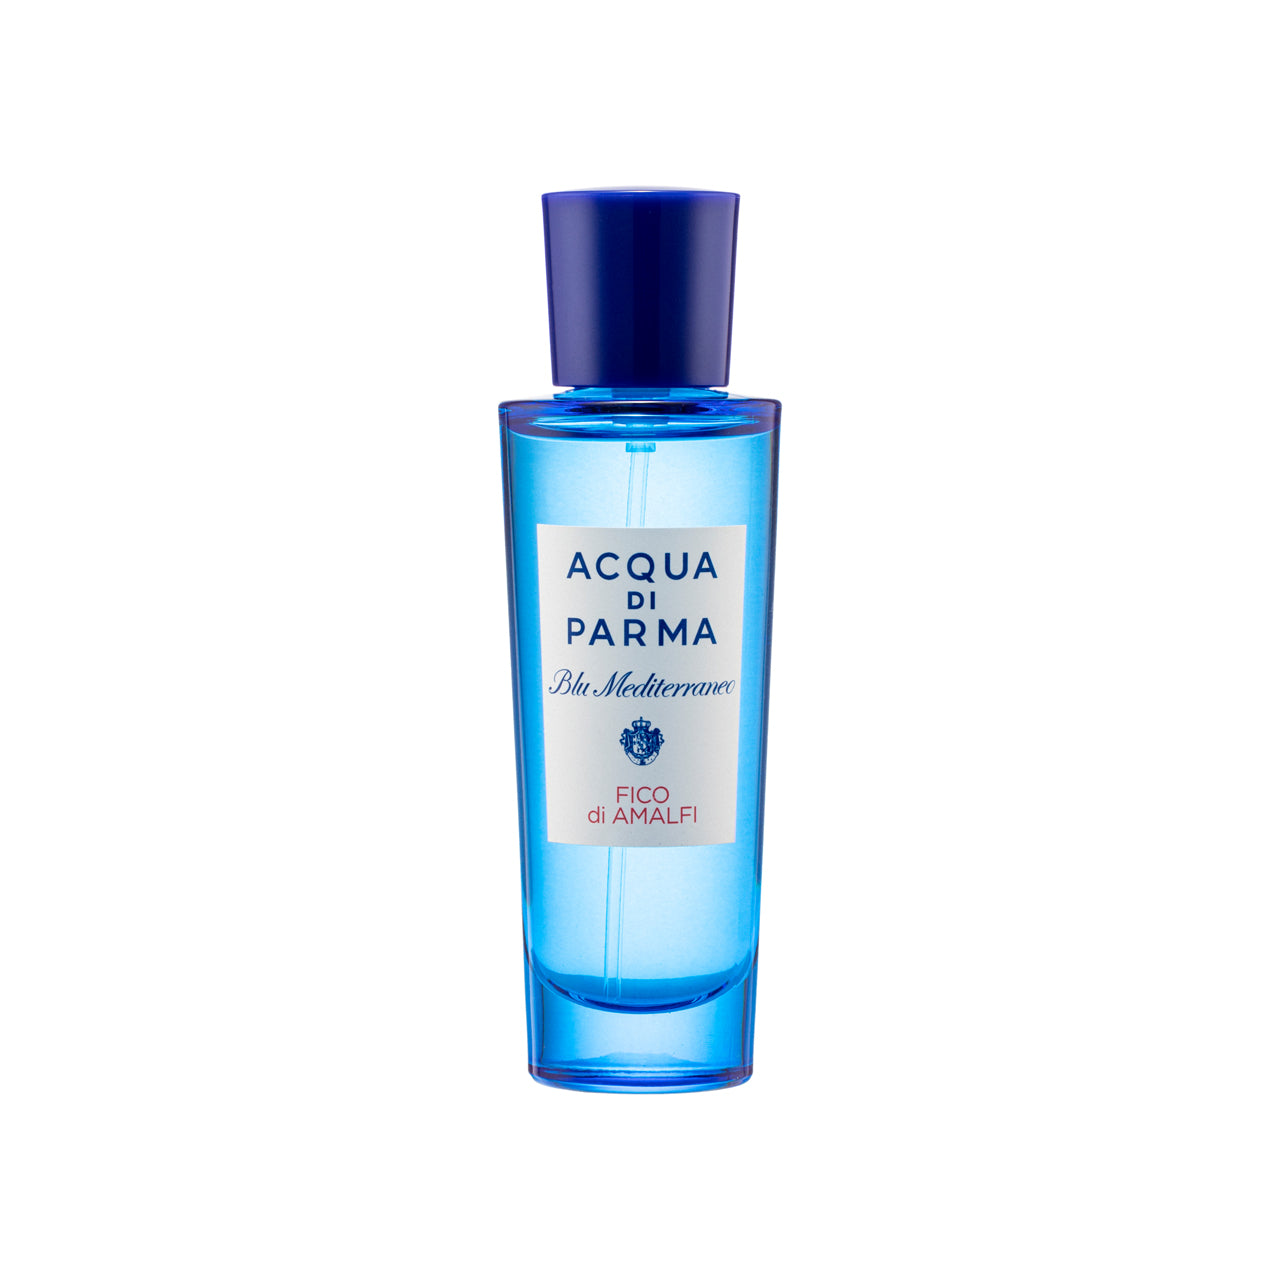 Acqua Di Parma Blu Mediterraneo Fico Di Amalfi Eau De Toilette Spray 30ml